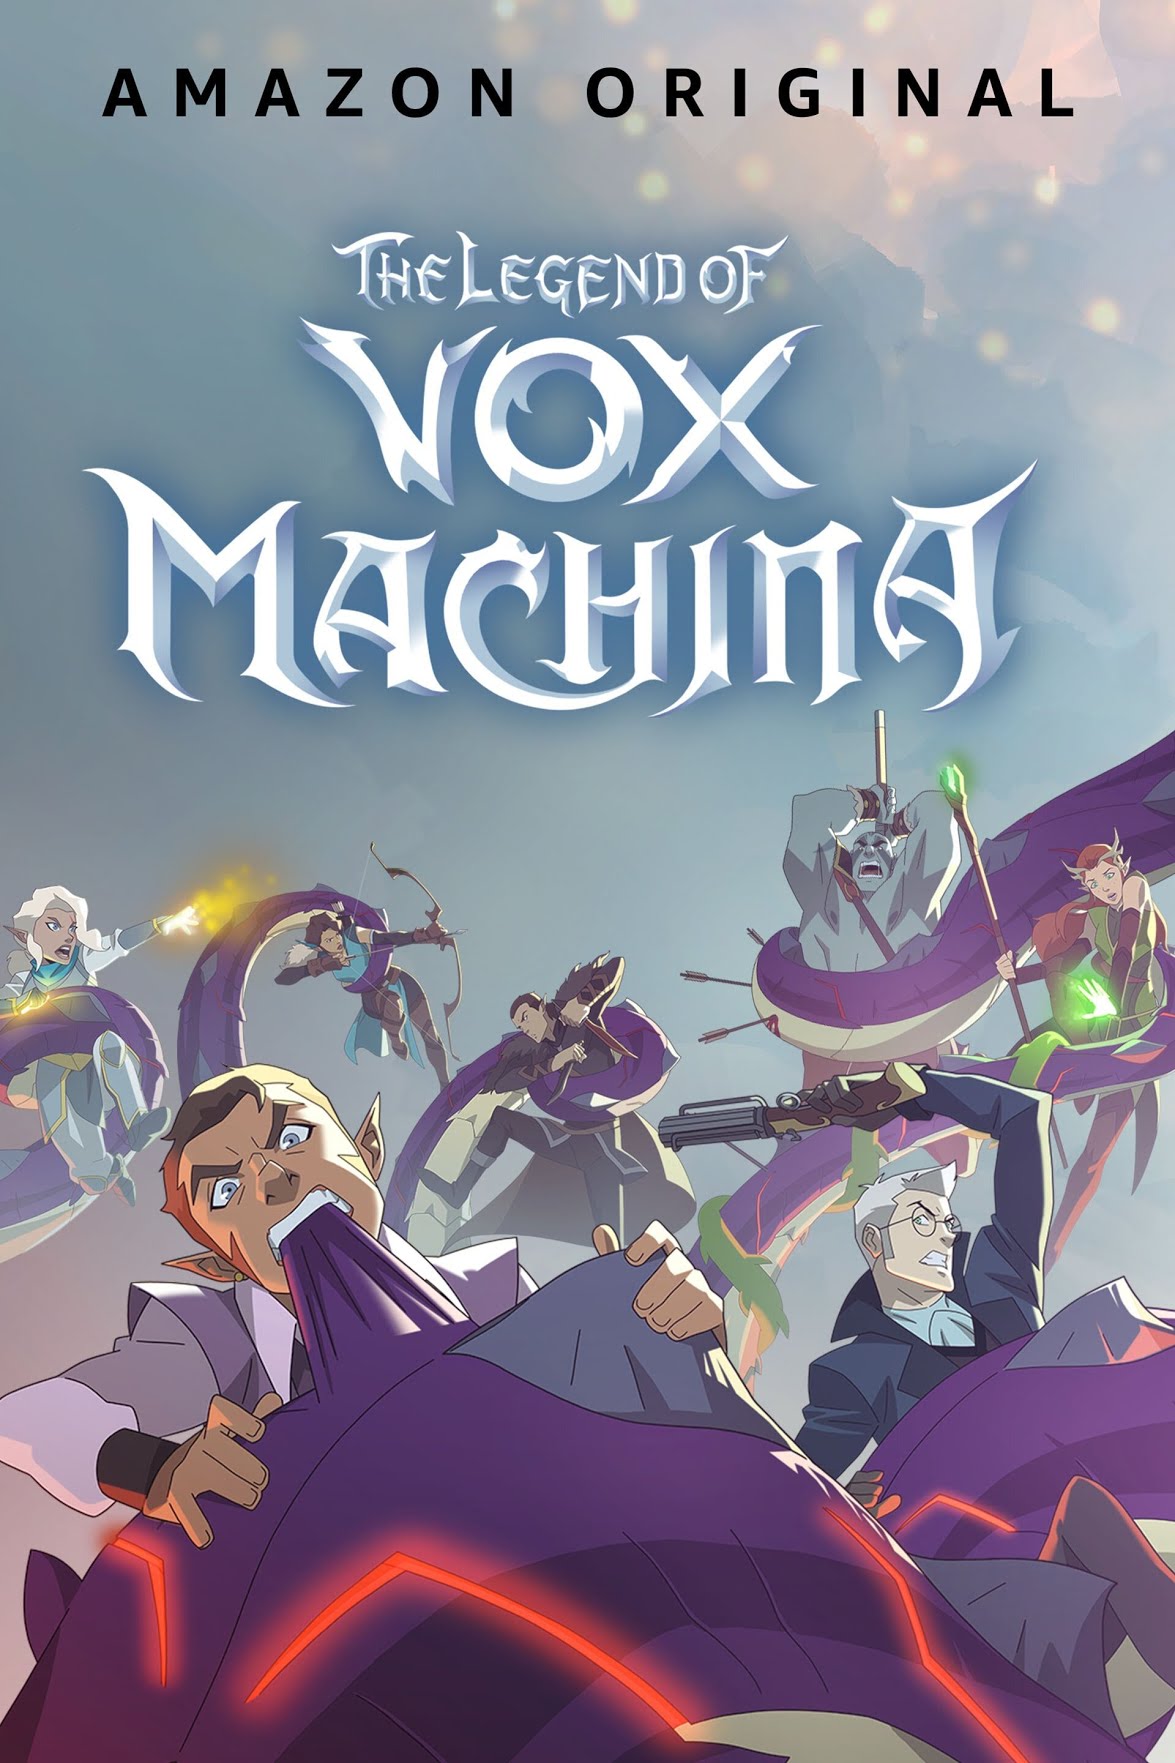 The Legend of Vox Machina movie poster